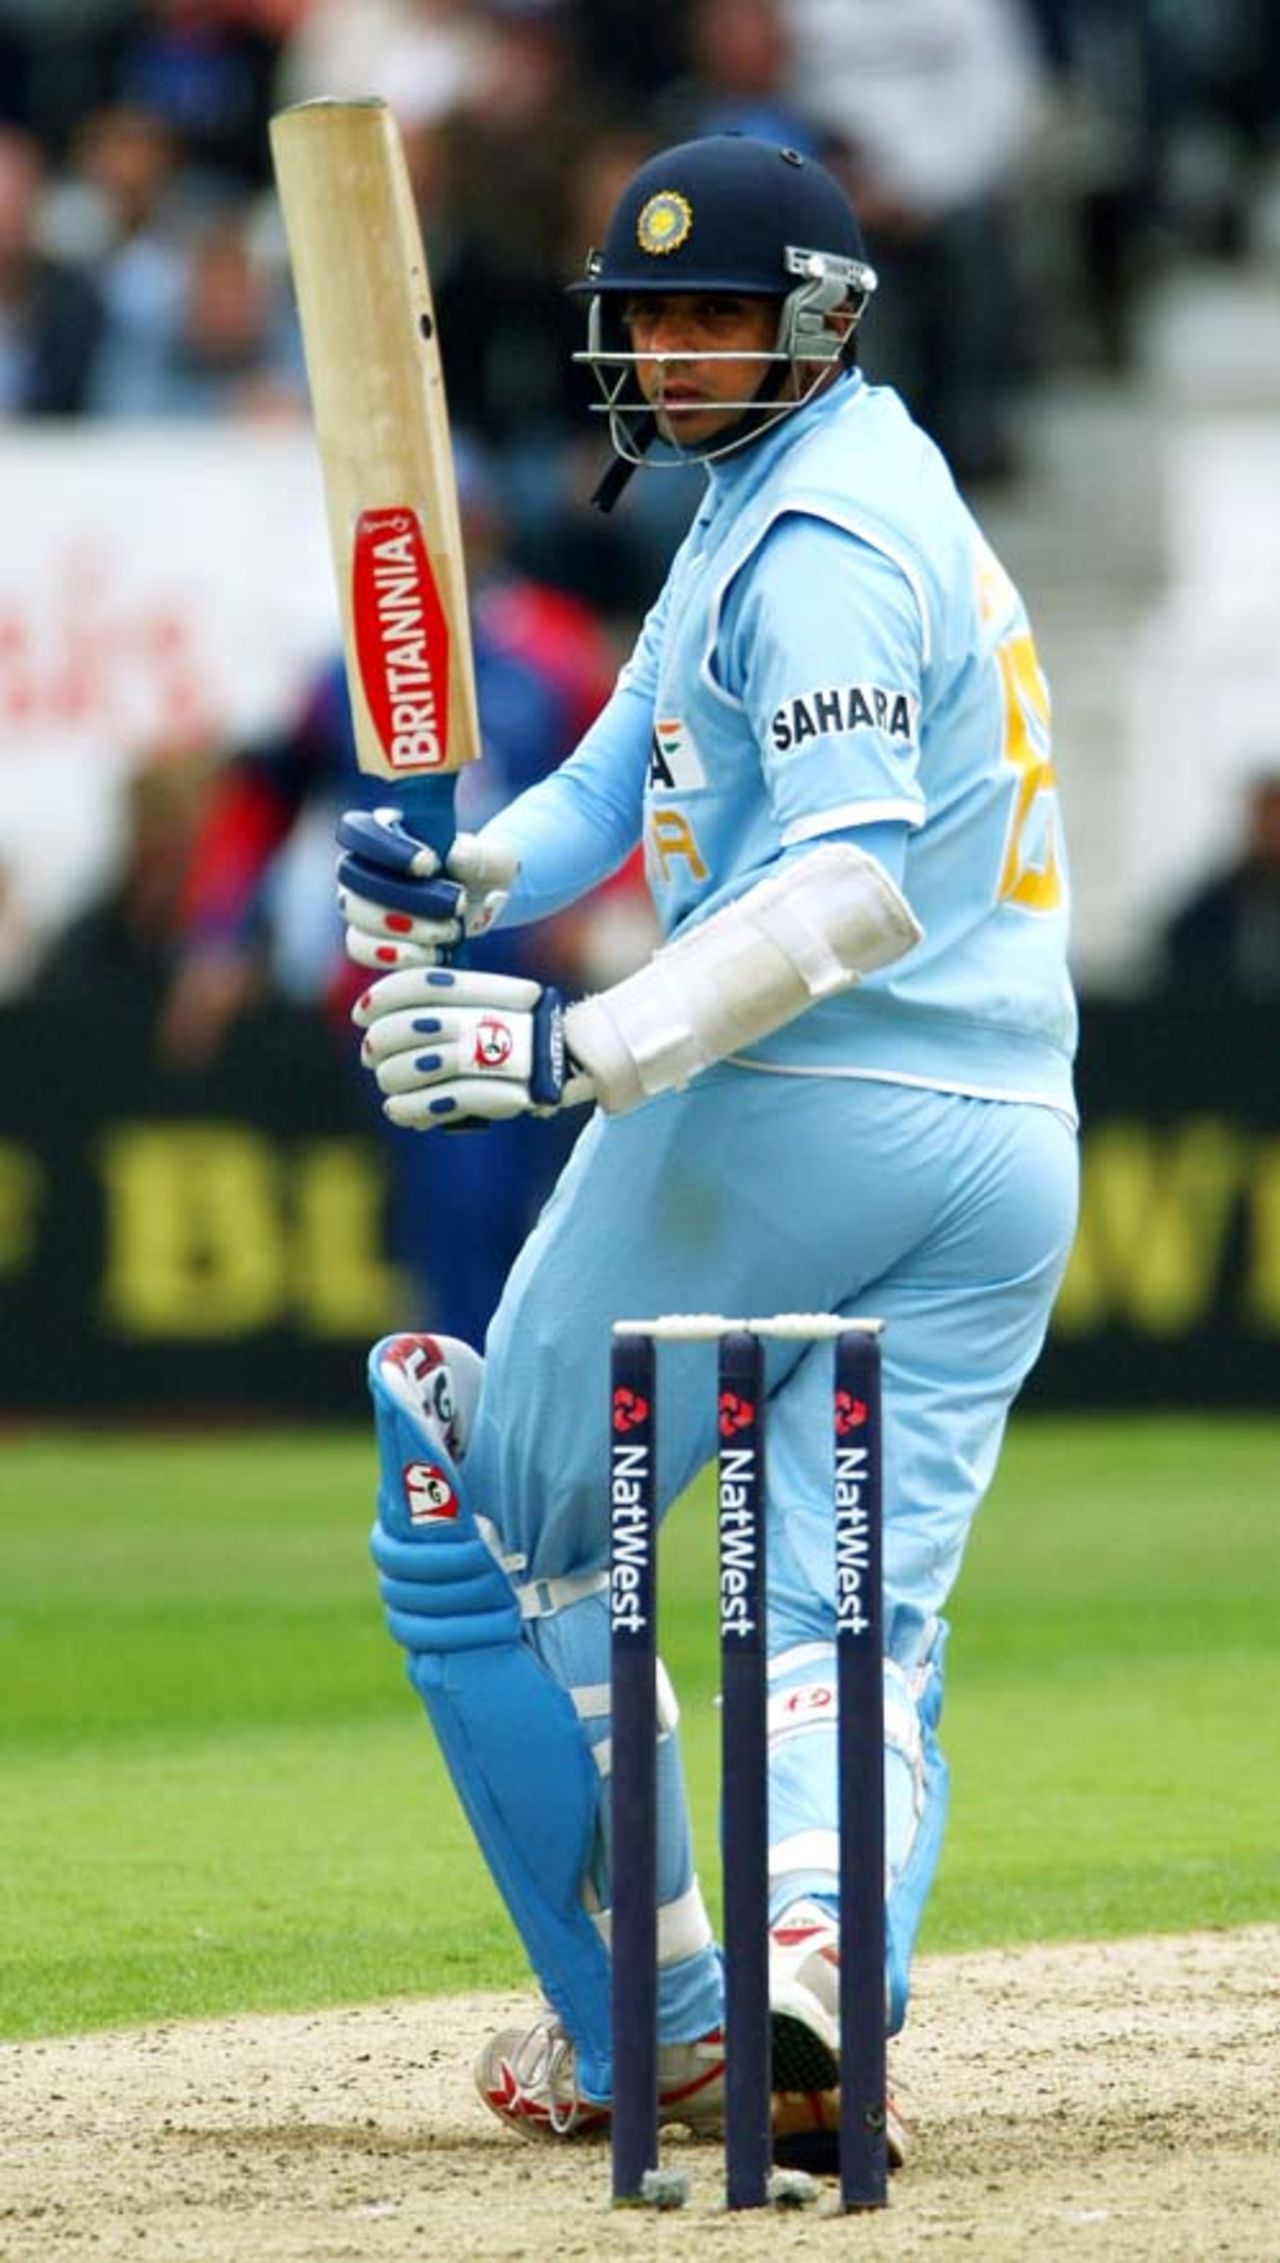 Rahul Dravid picks up a boundary during his cameo of 24 England v India, 5th ODI, Headingley, September 2, 2007